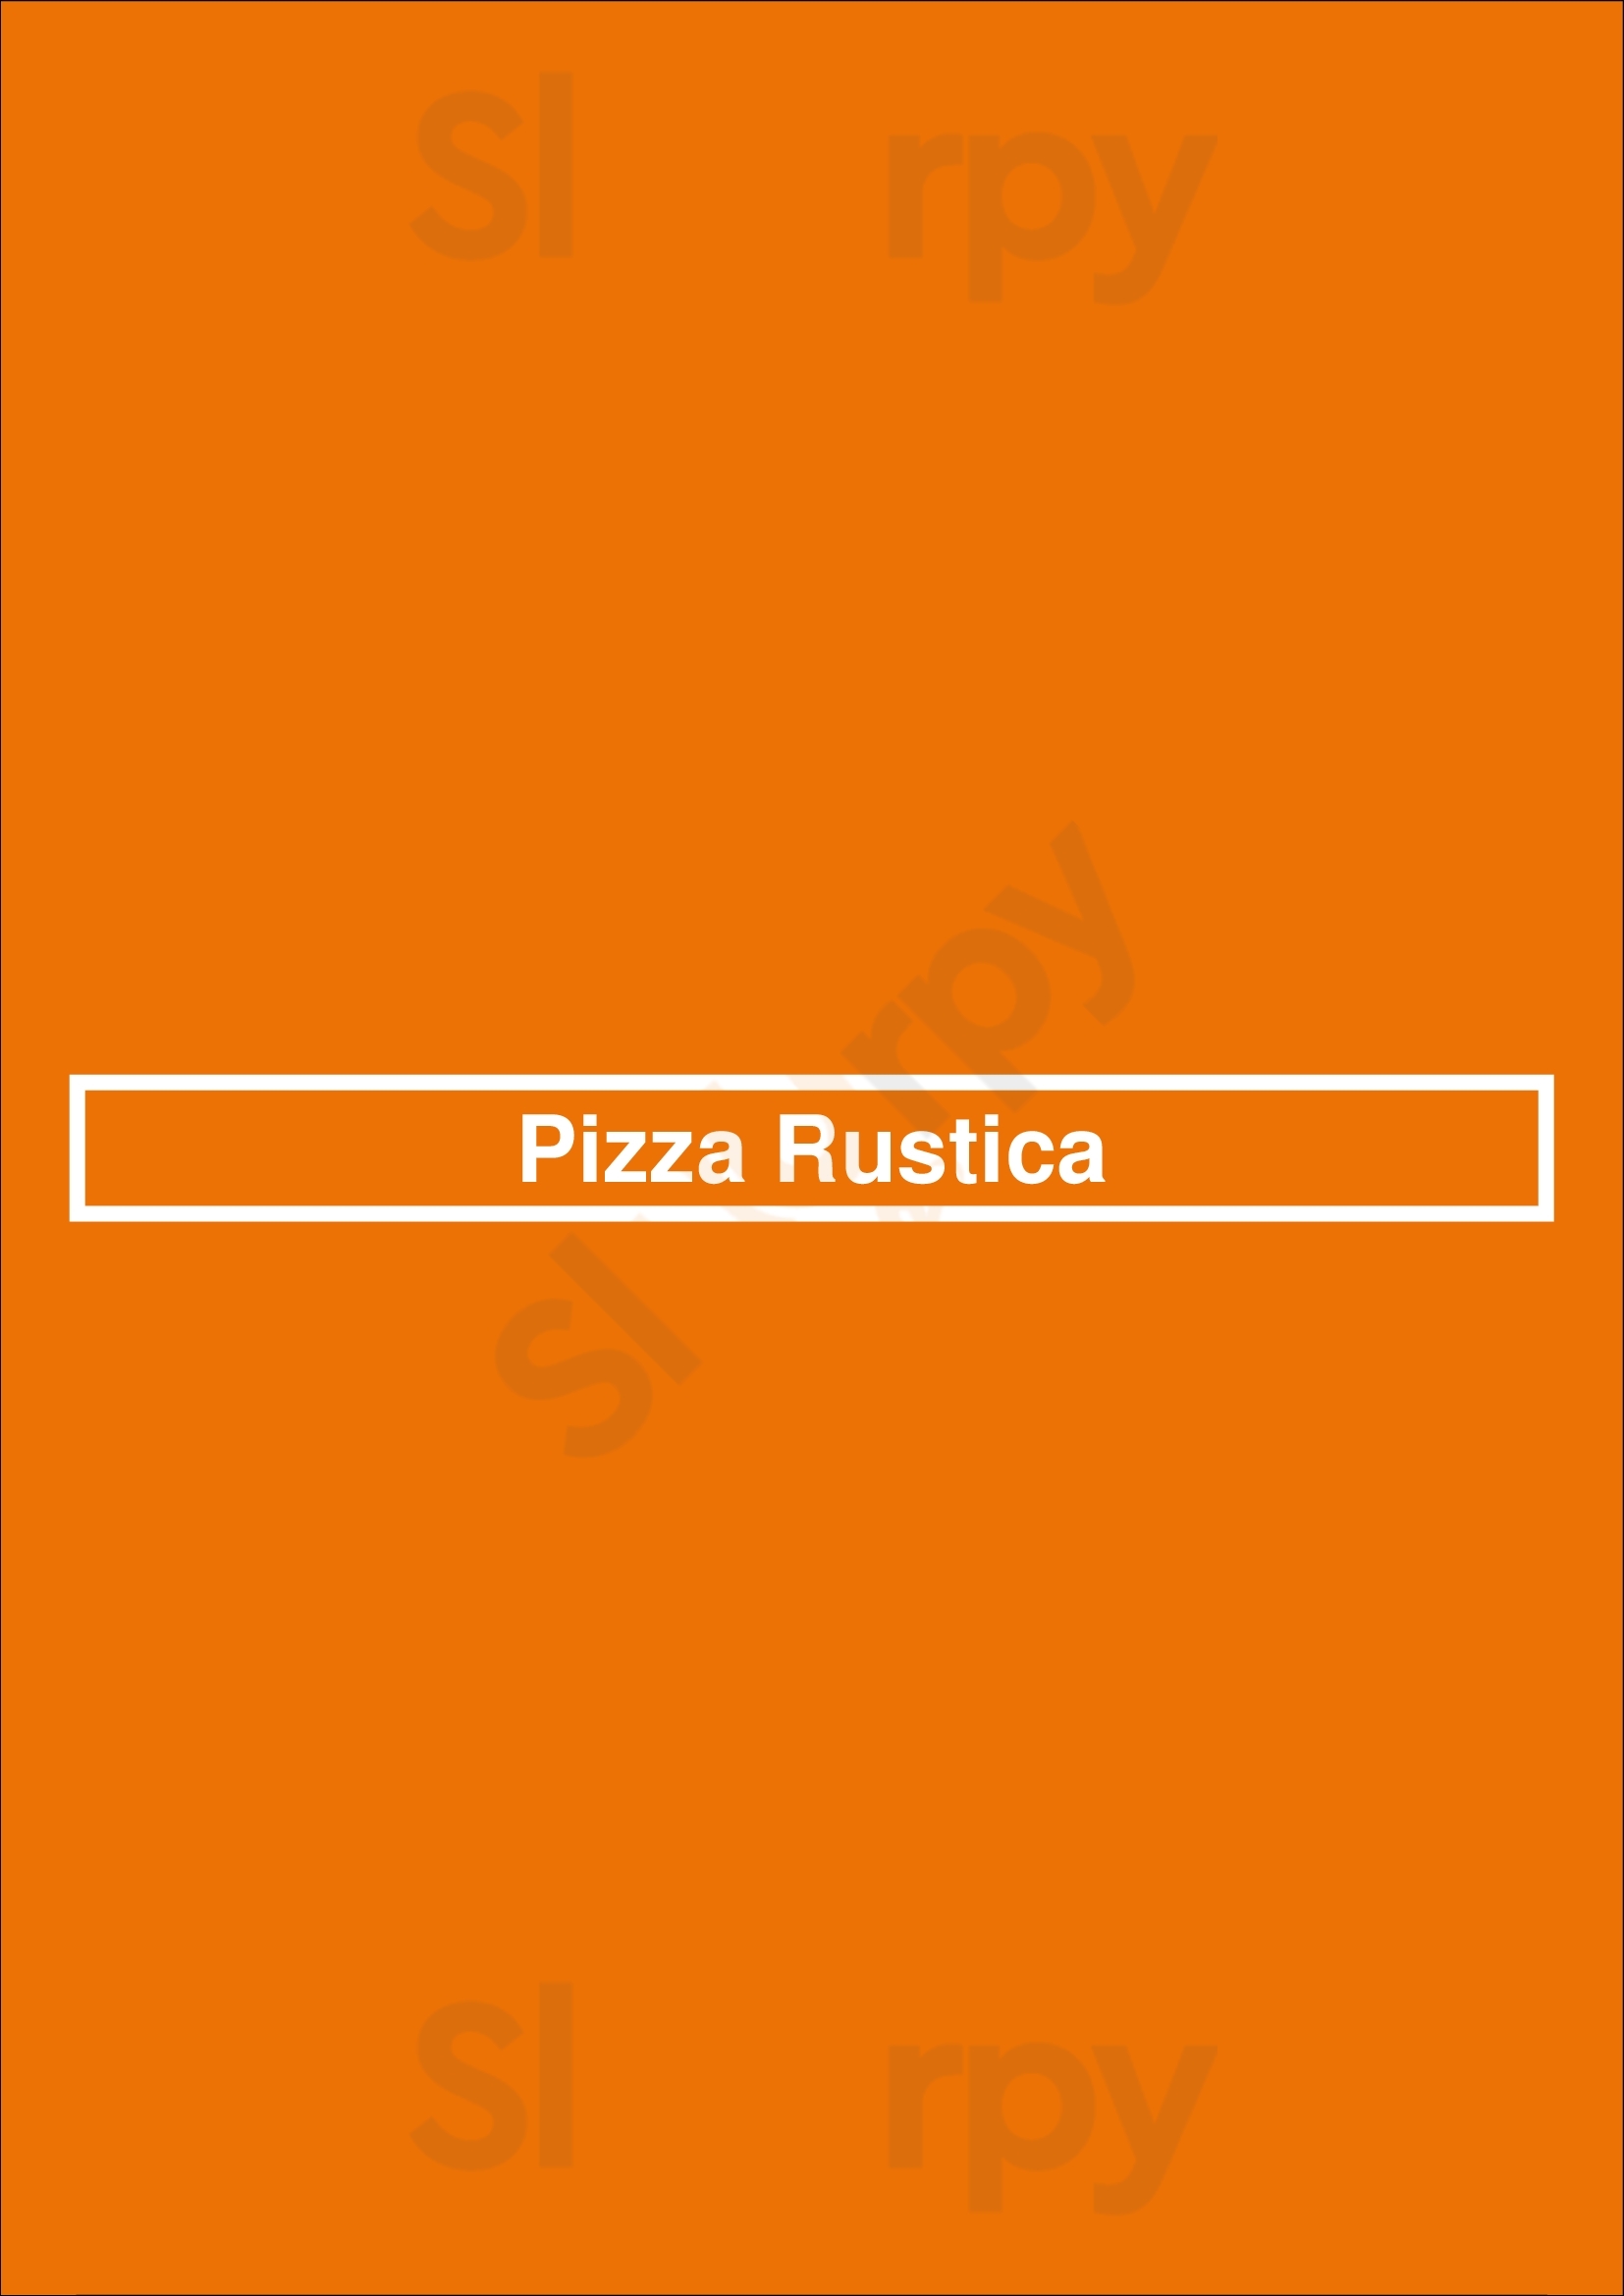 Pizza Rustica Toronto Menu - 1